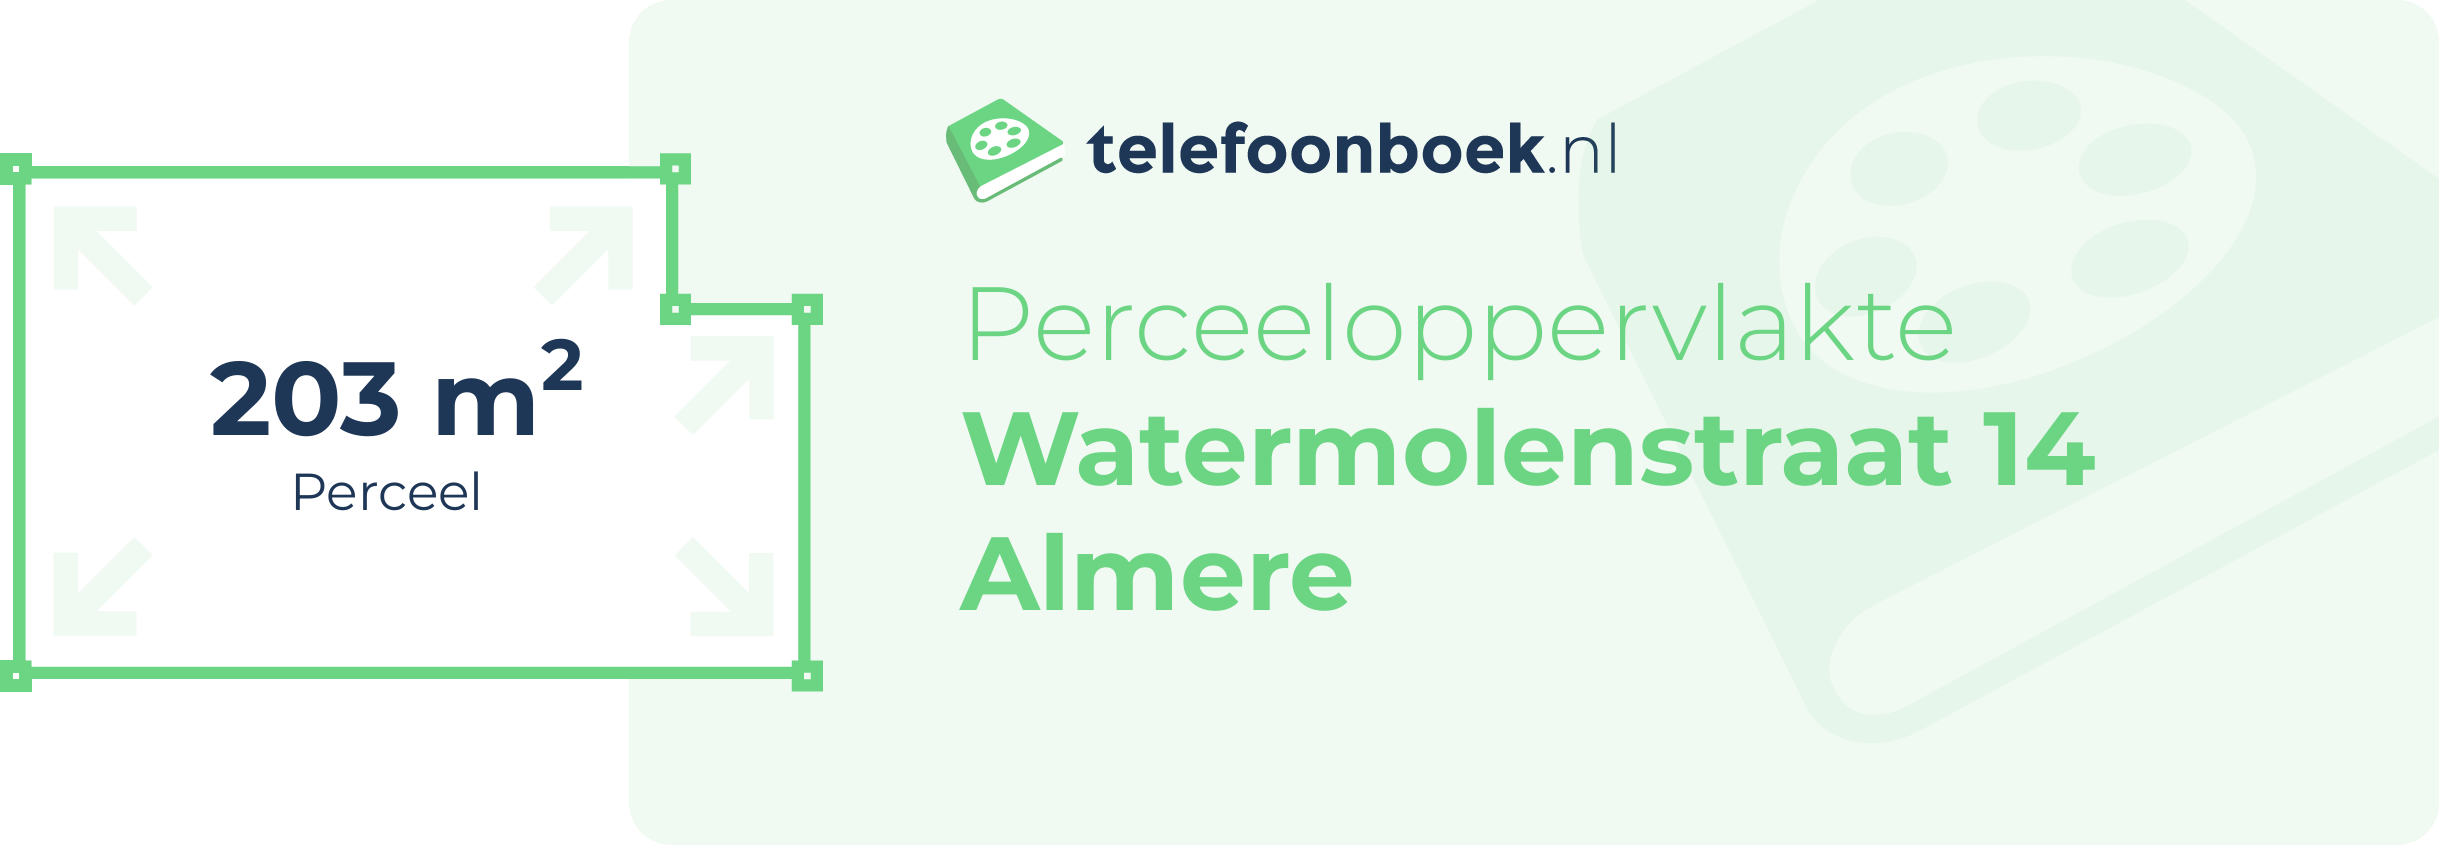 Perceeloppervlakte Watermolenstraat 14 Almere